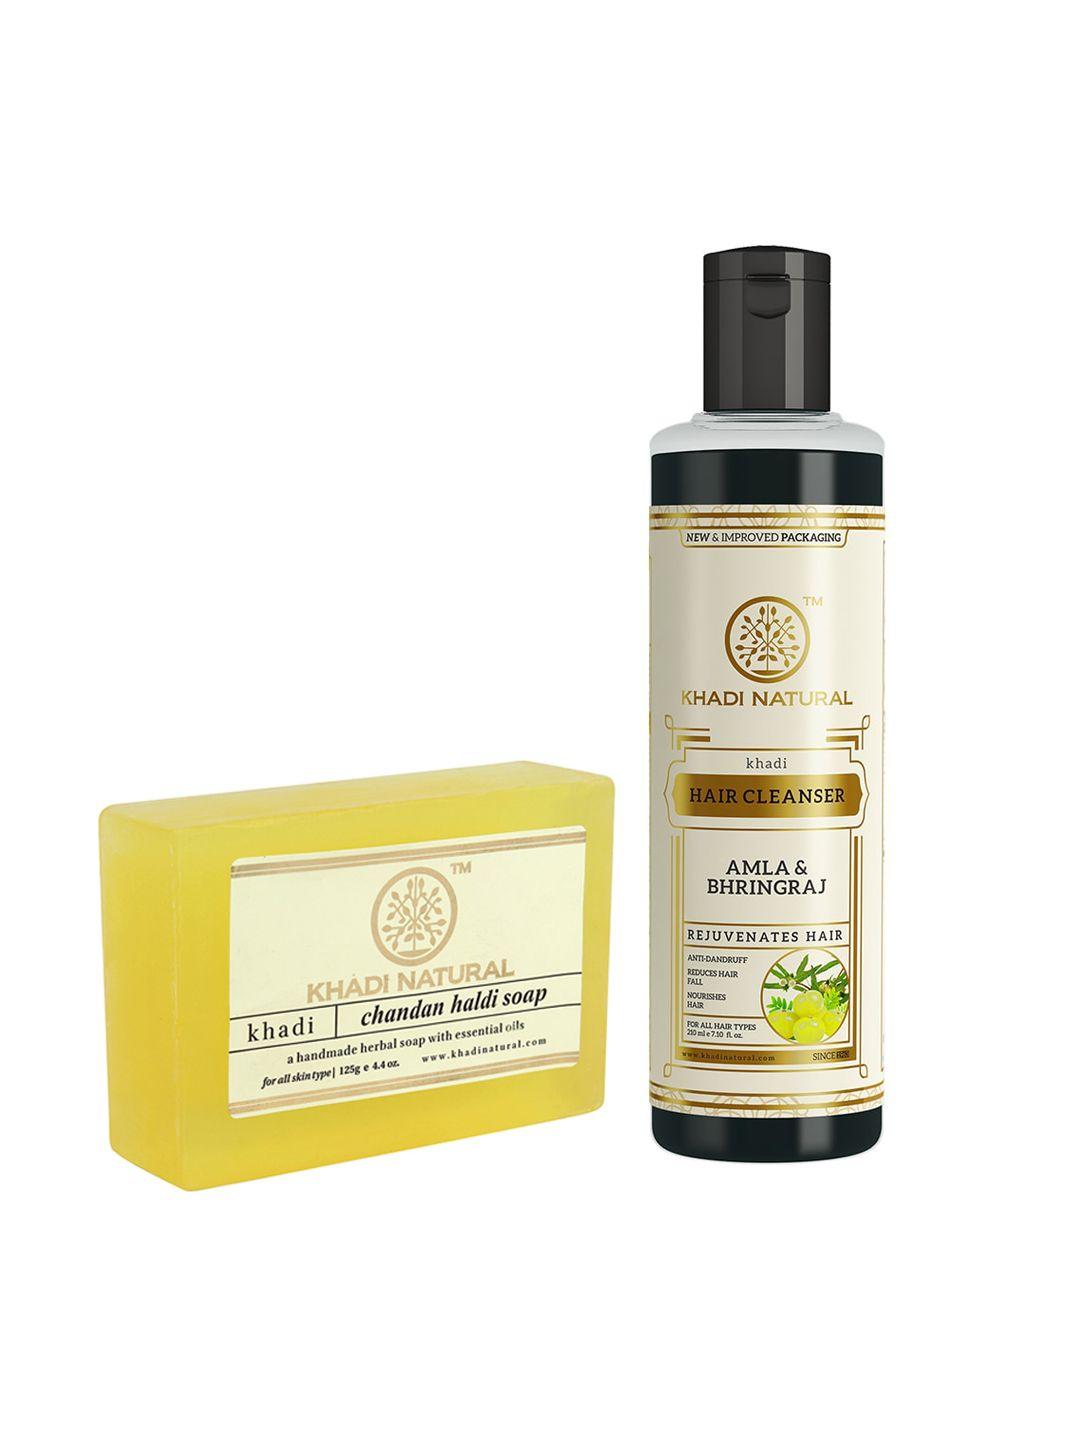 khadi natural amla & bhringraj hair cleanser & chandan haldi soap